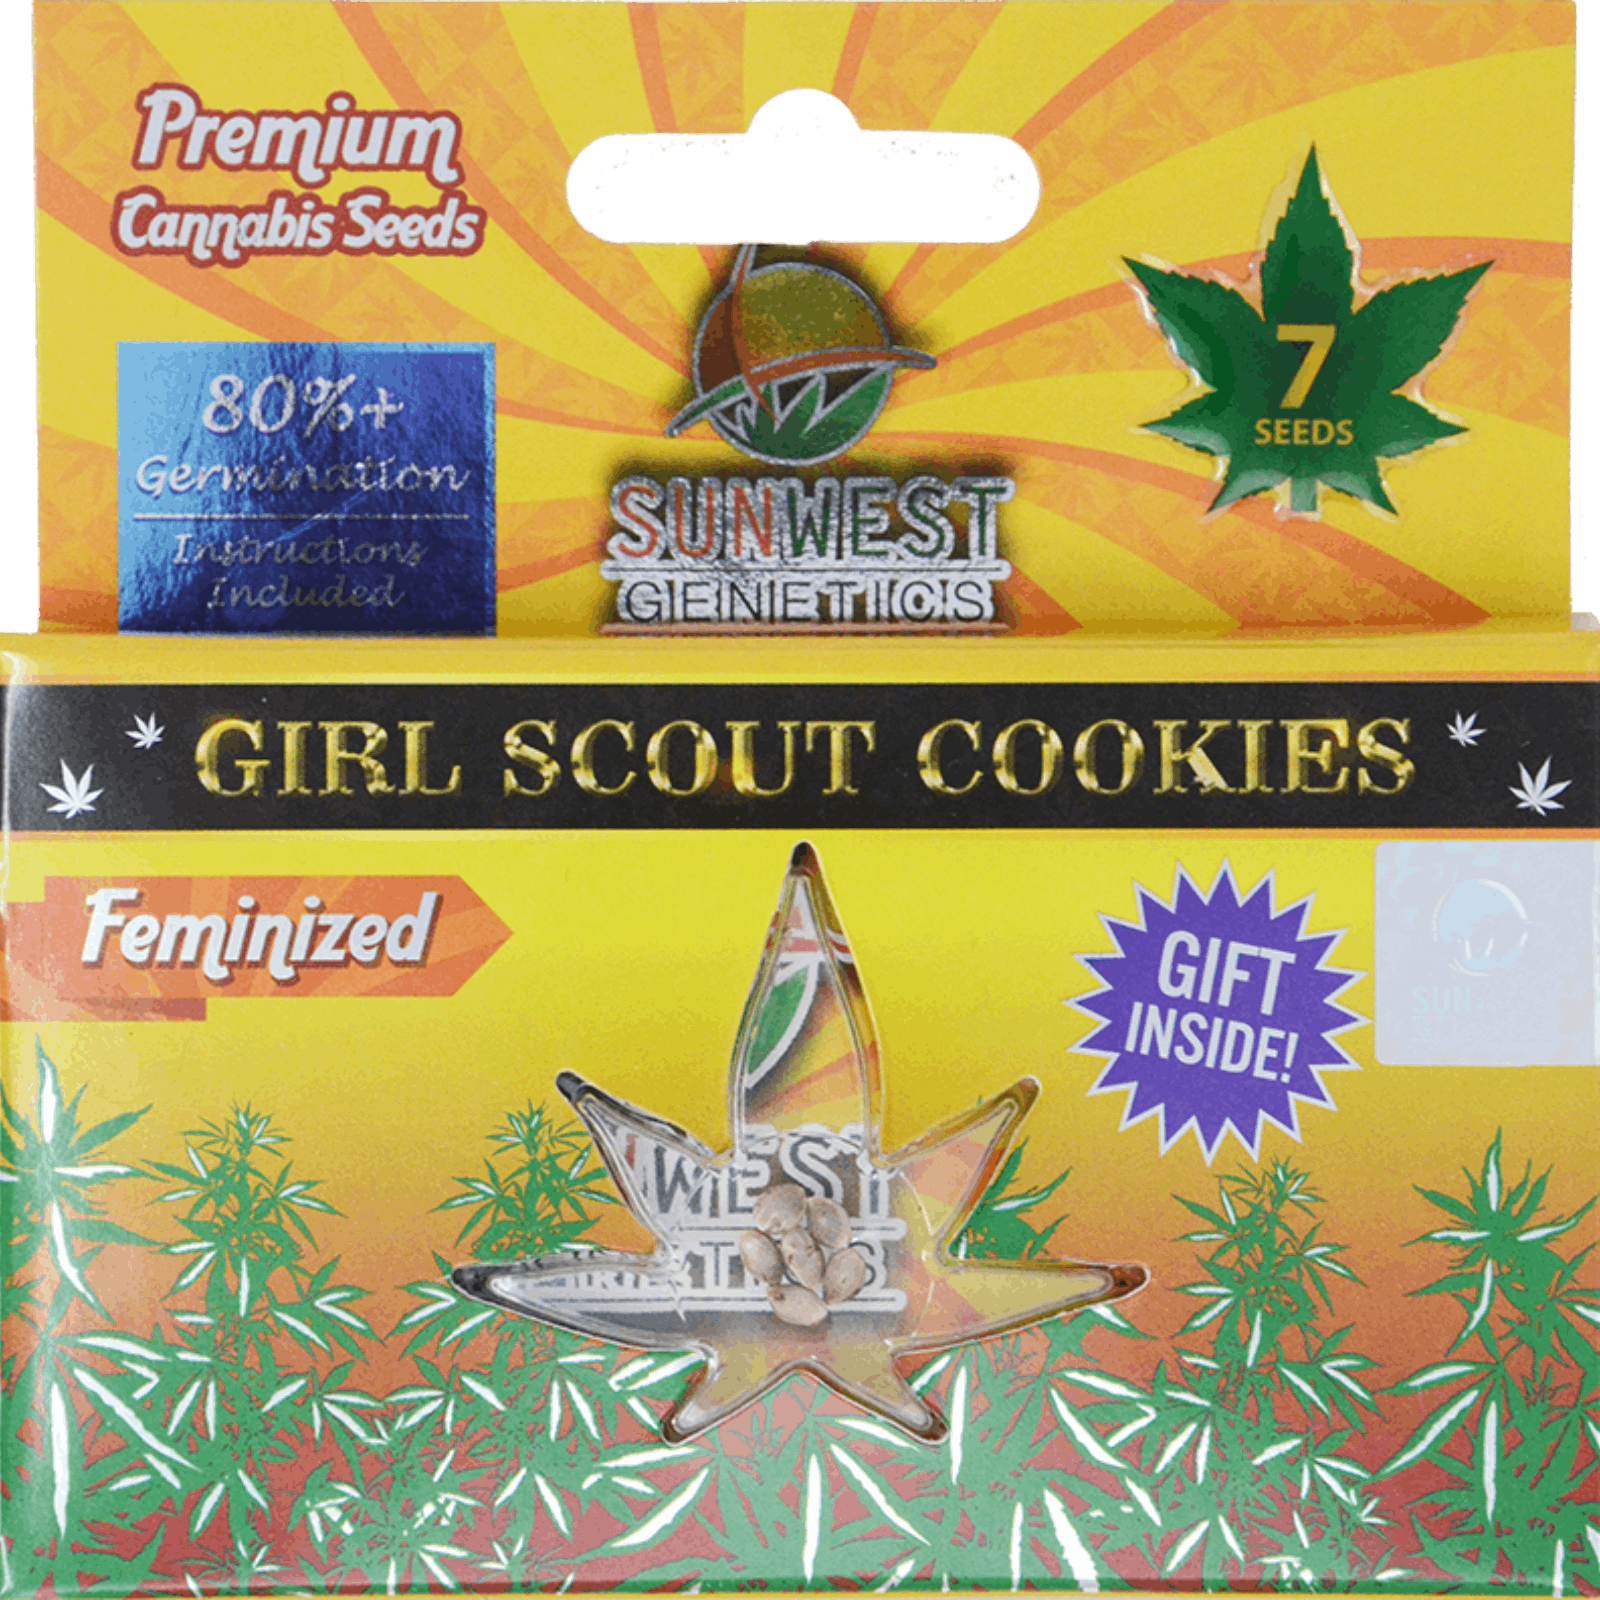 Sunwest Genetics Gsc Fka Girl Scout Cookies Cannabis Seeds By Sunwest Genetics Leafly 8240